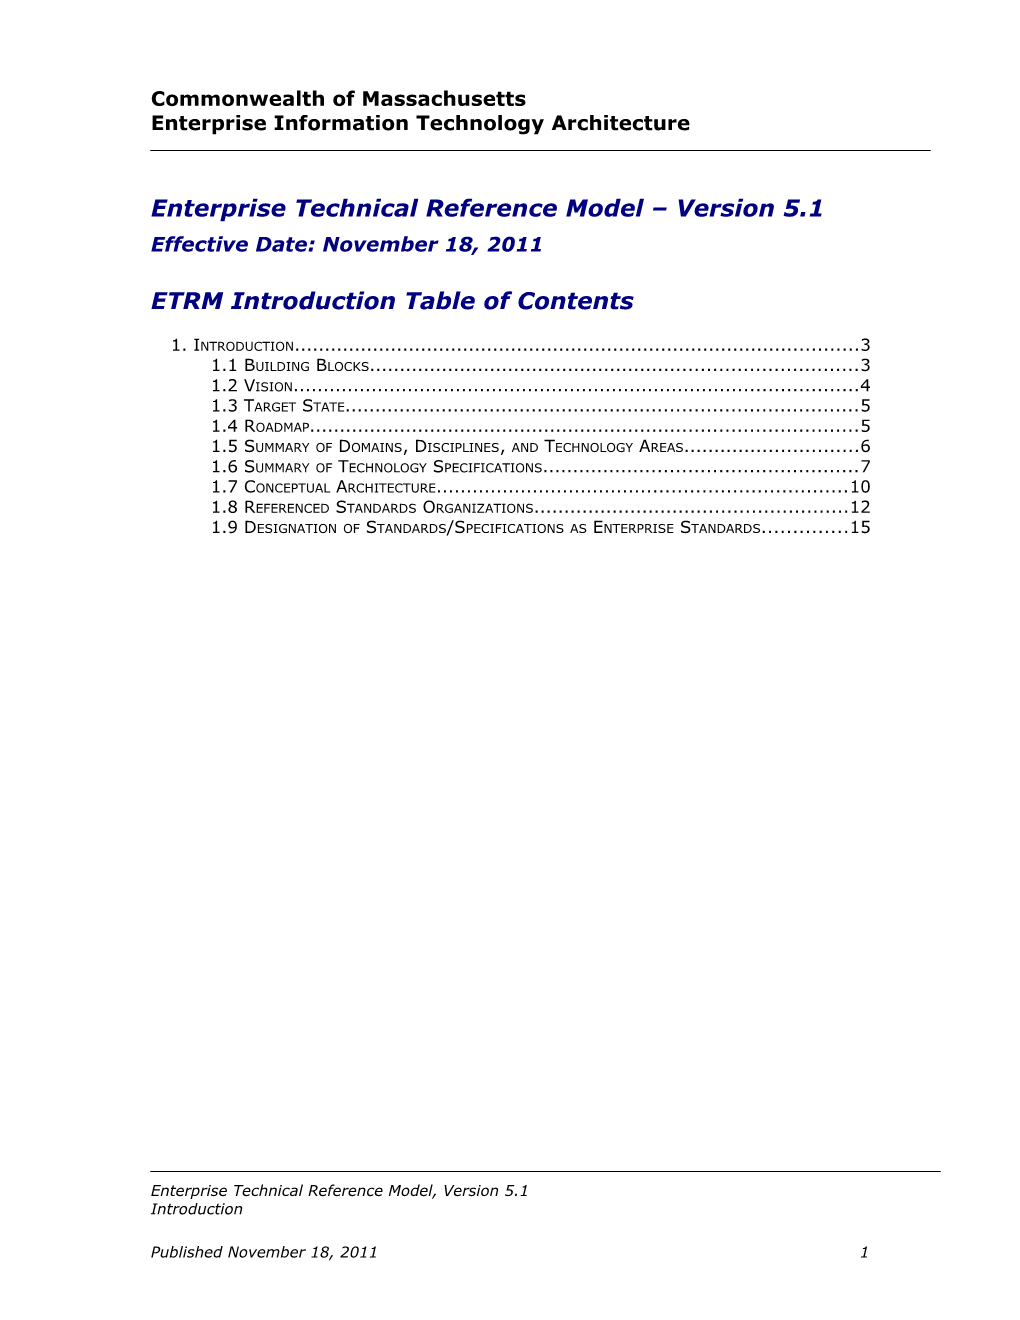 Enterprise Technical Reference Model Version 5.1